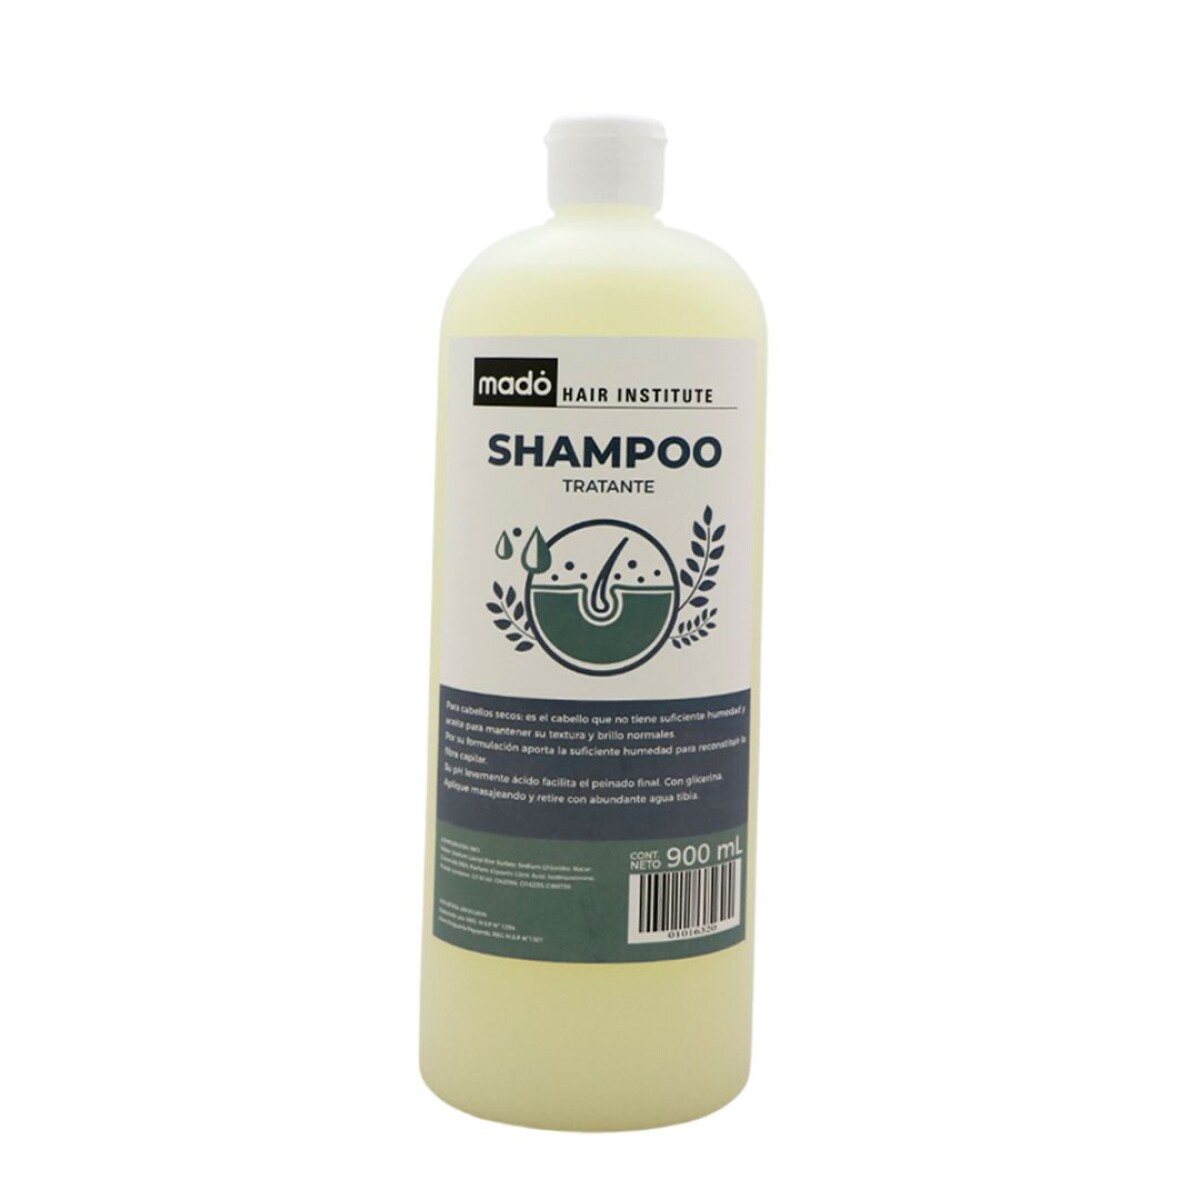 Shampoo MADO - Tratante (SIN SAL) - 900 mL 